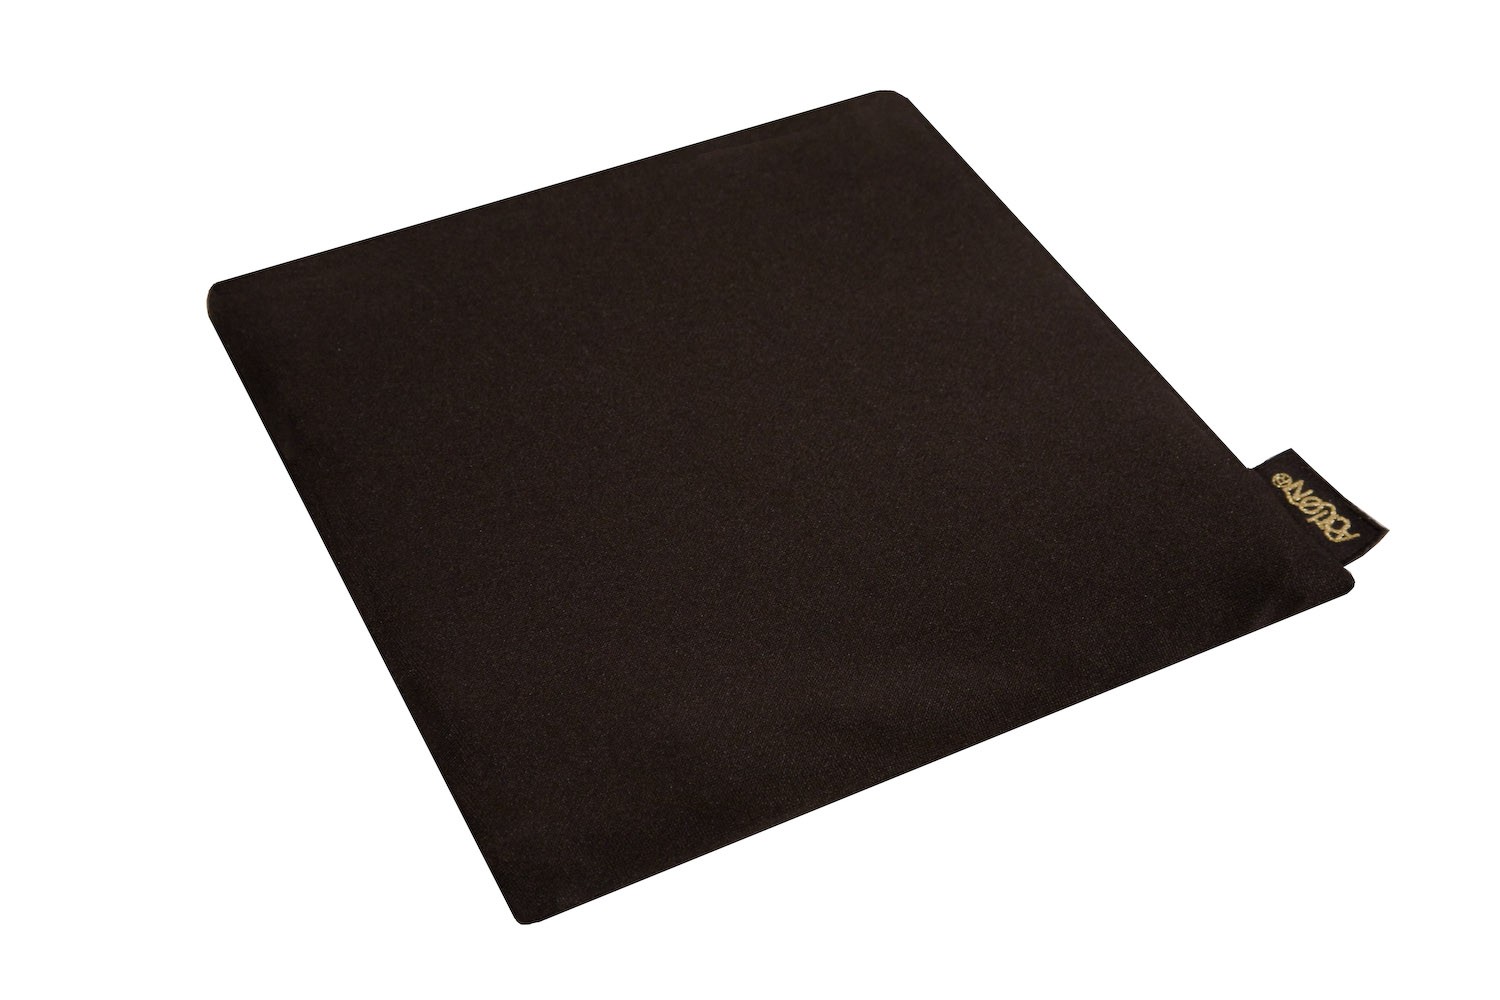 Akton Polymer Adaptive Flat Pad 5/8 inch : pressure relief gel pad